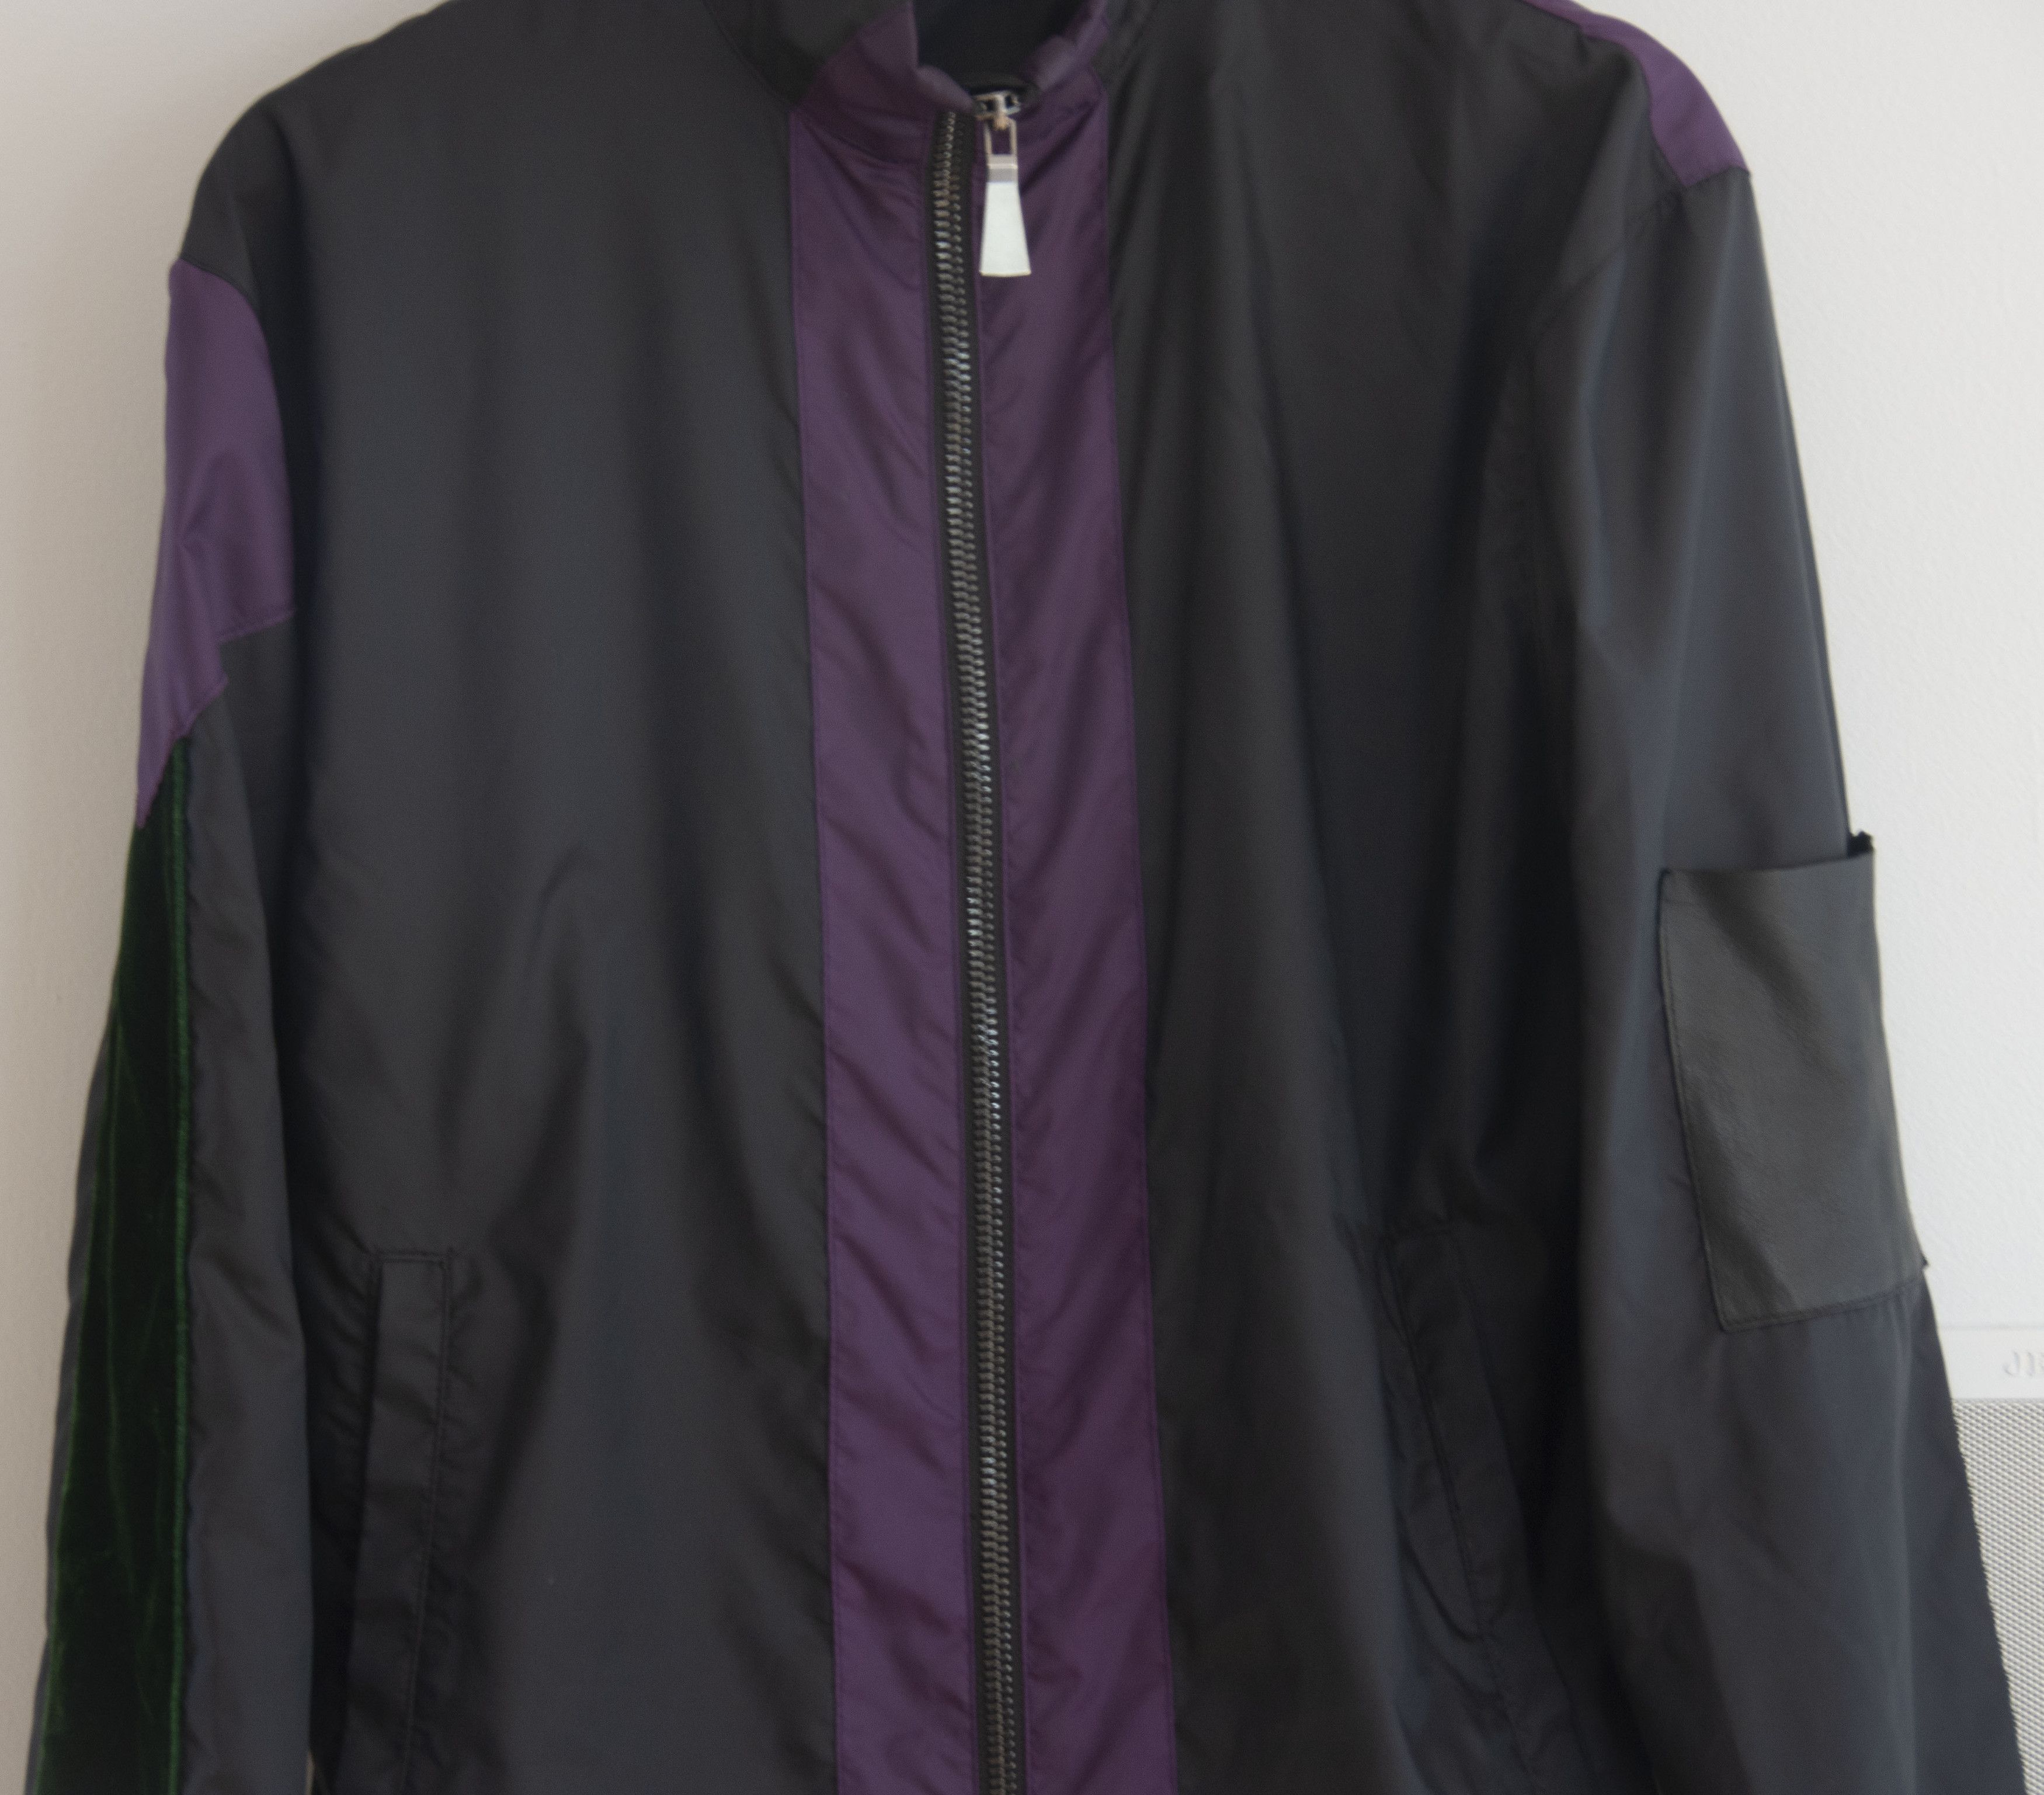 Pyer Moss Pyer Moss Black and Purple Track Jacket/ Tracksuit Jacket Size US XS / EU 42 / 0 - 2 Preview